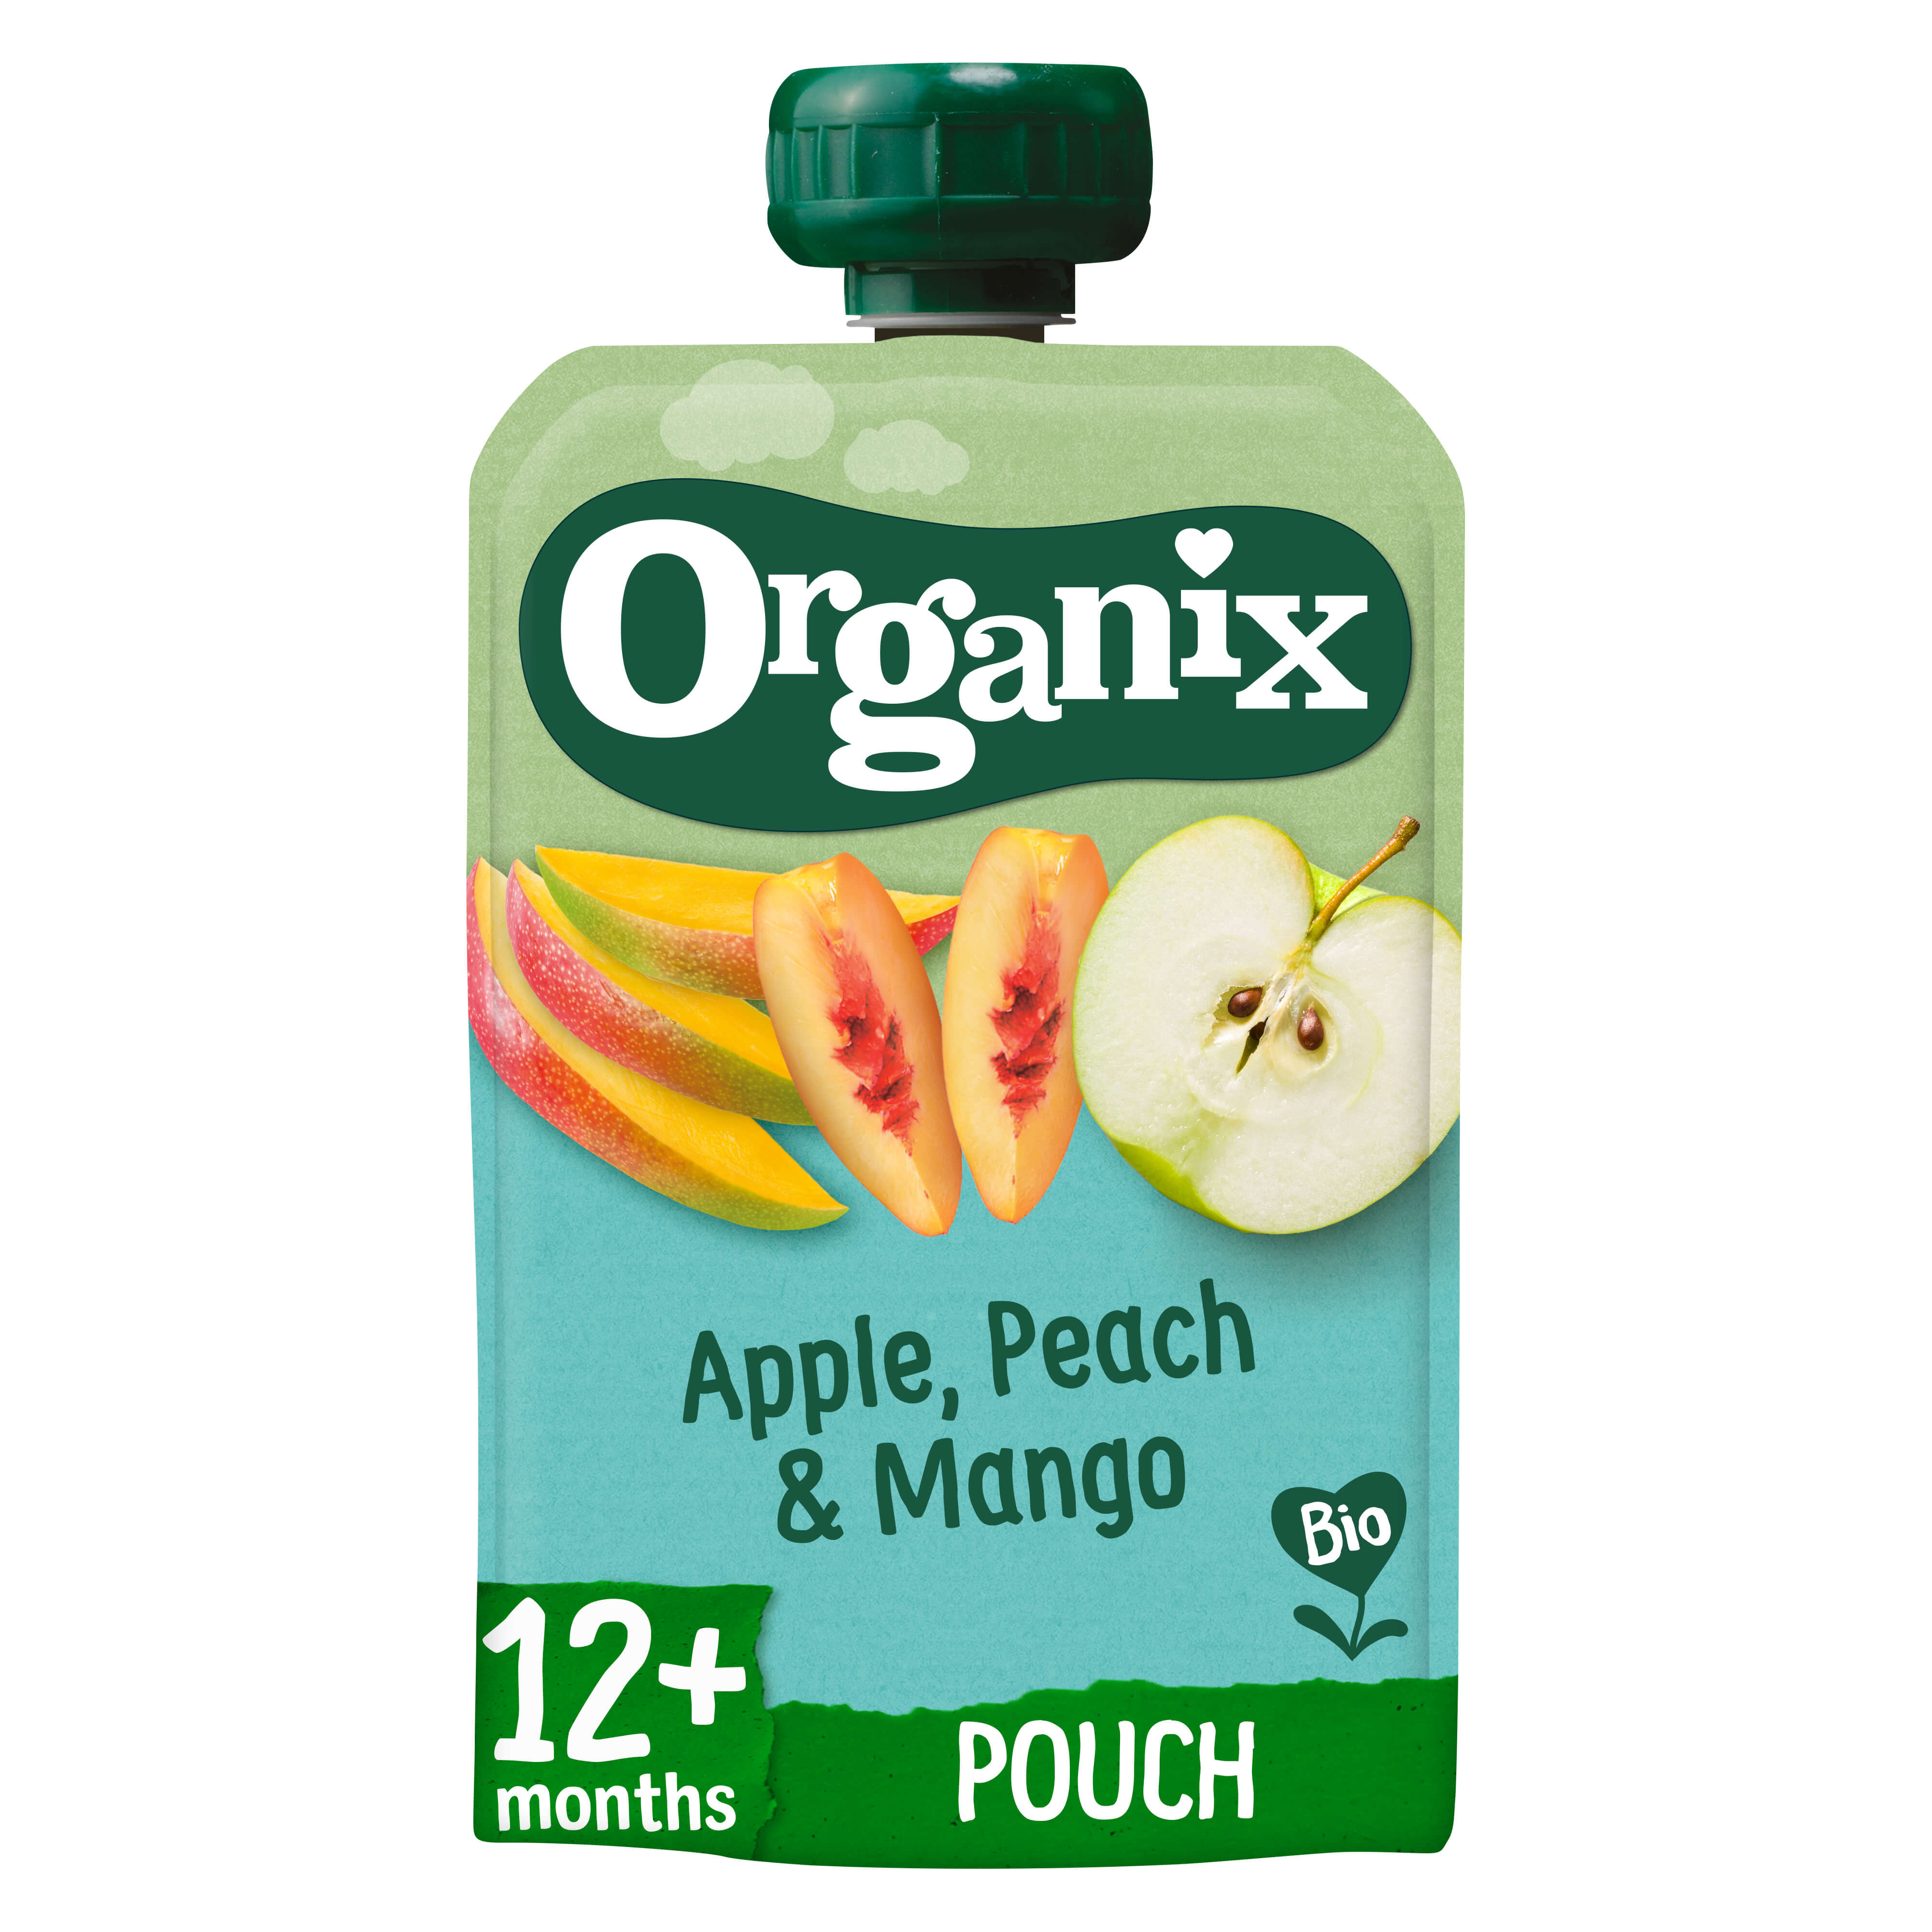 Organix Pouch - Apple, Peach & Mango